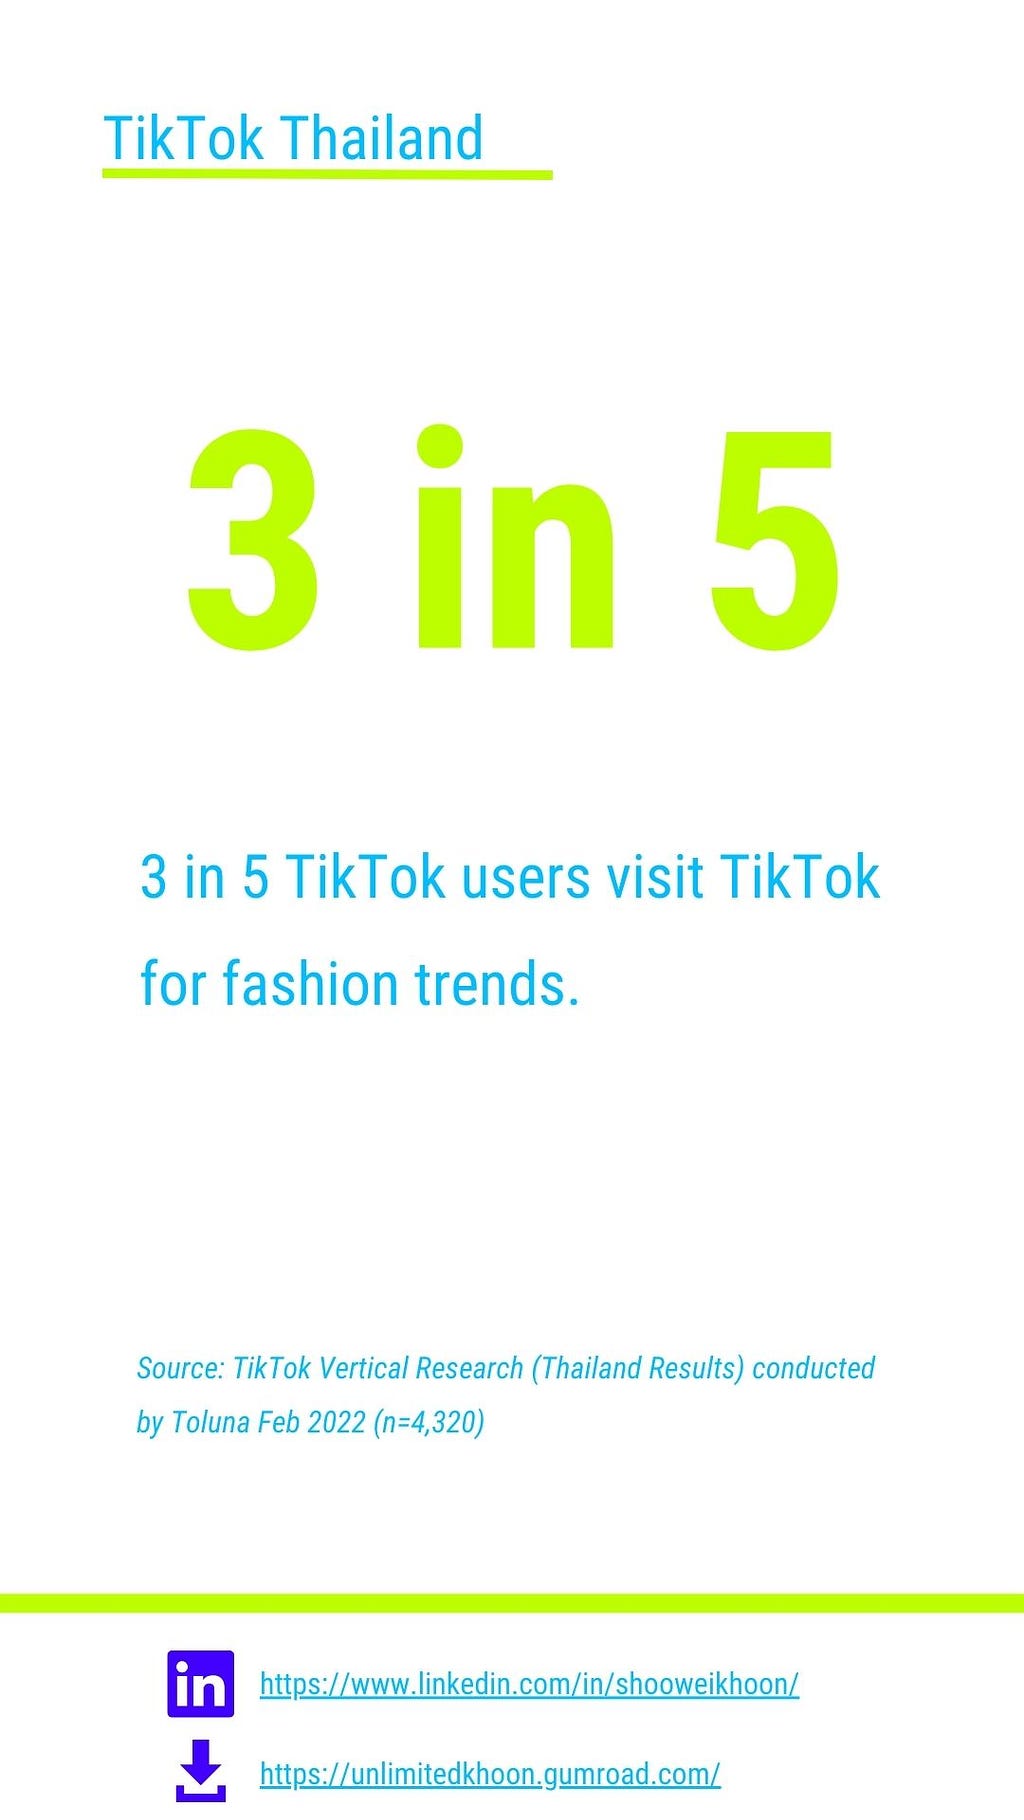 3 in 5 Thailand TikTok users visit TikTok for fashion trends.